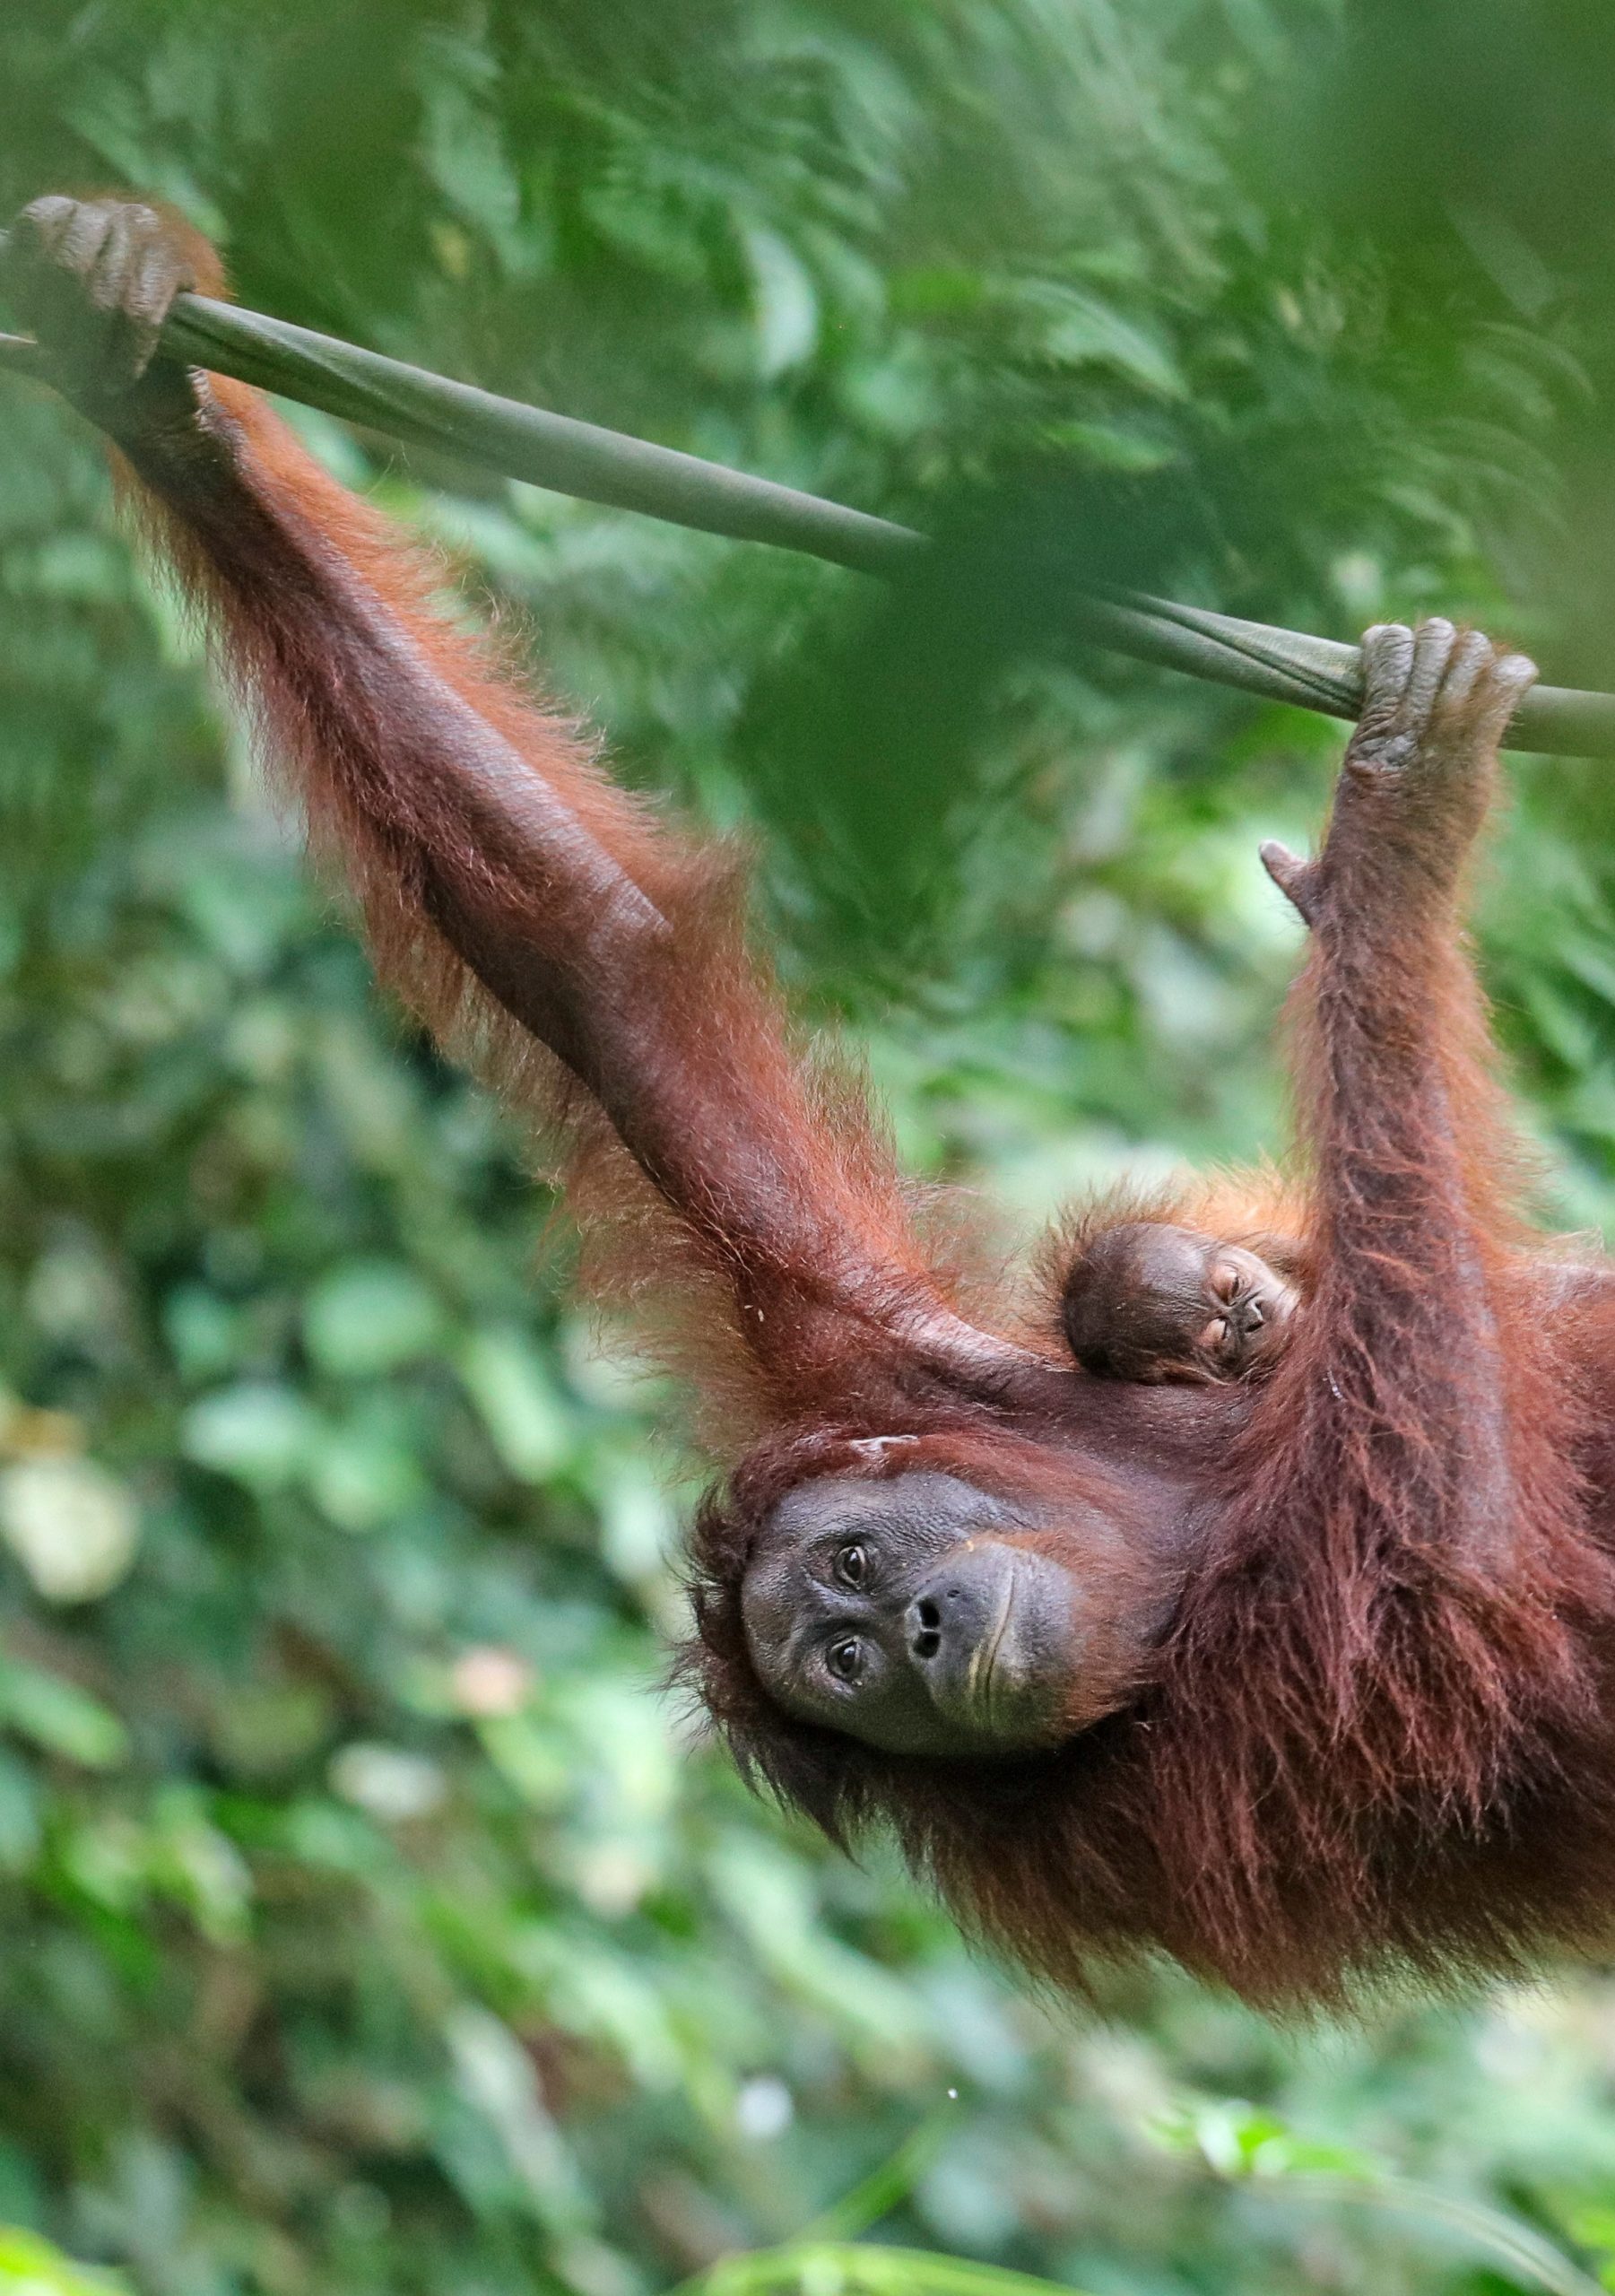 Wildlife conservation in Borneo